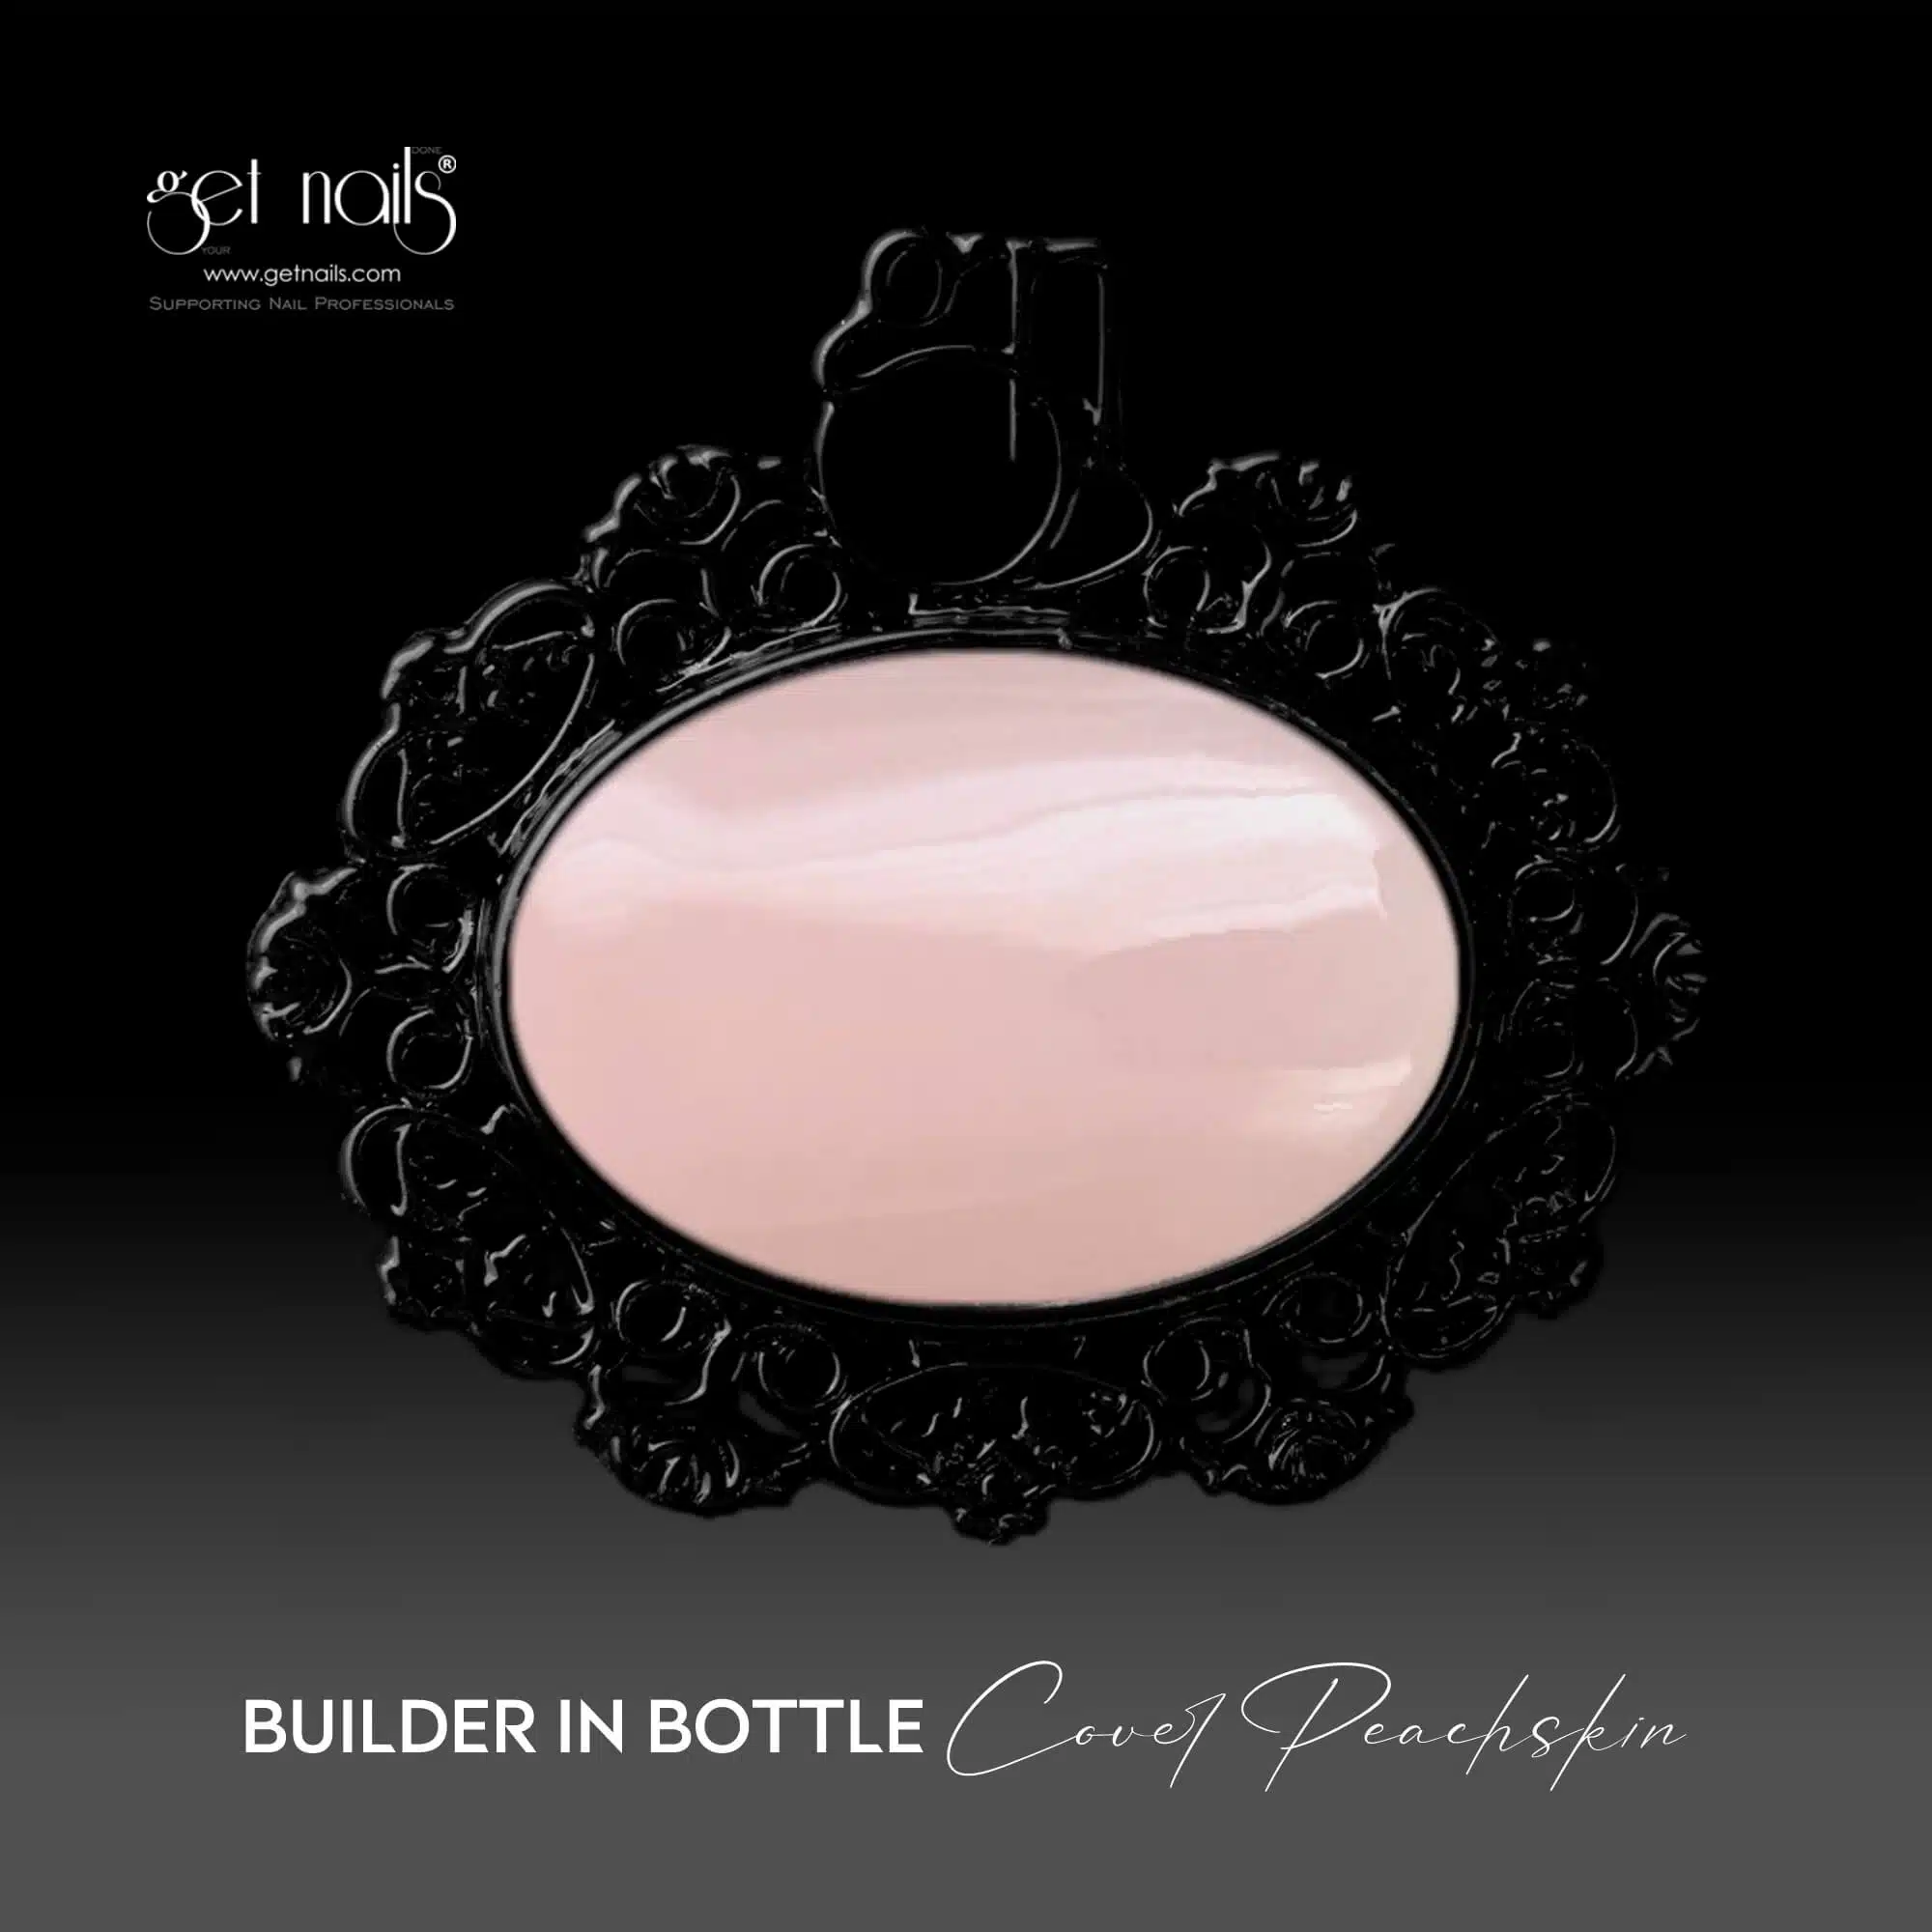 Get Nails Austria - Builder in Bottle Cover Peachskin 15g